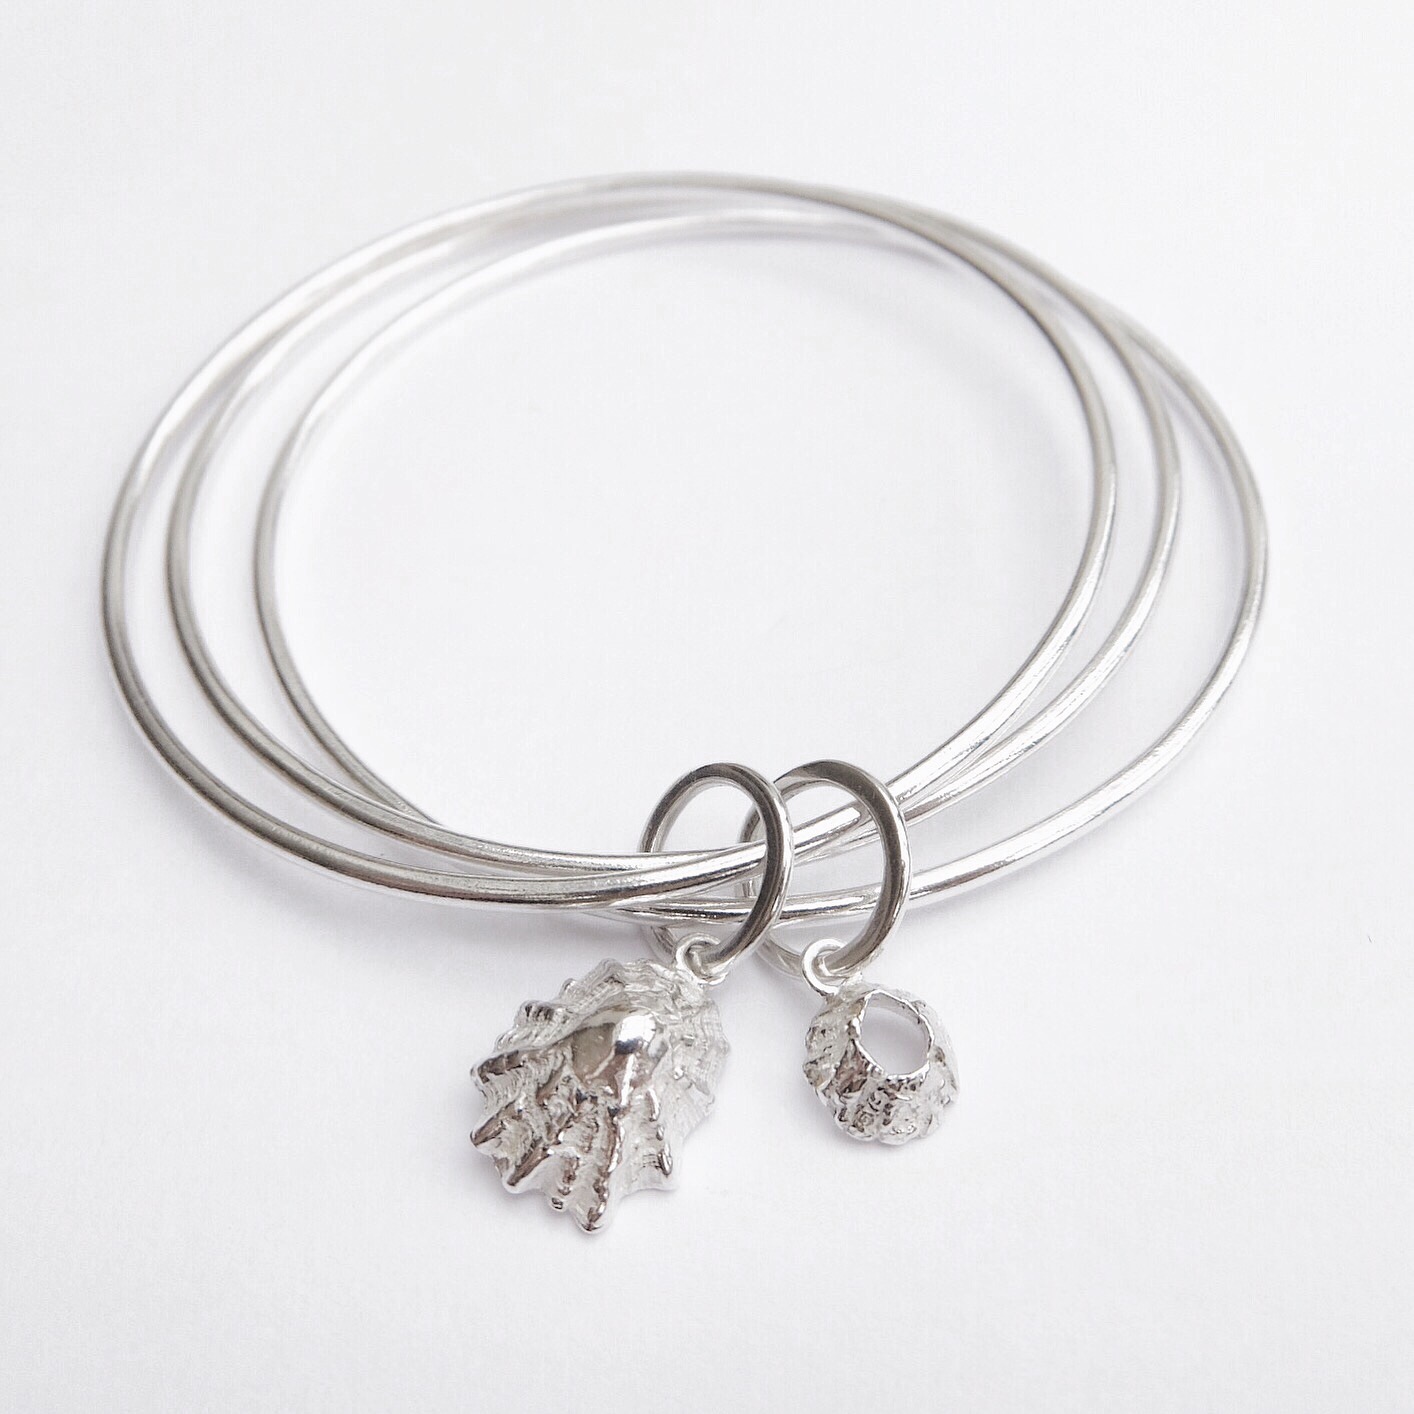 Barnacle and limpet sterling silver handmade bangle bracelet jasmine Bowden ocean inspired jewellery organic stacking bangles.jpg